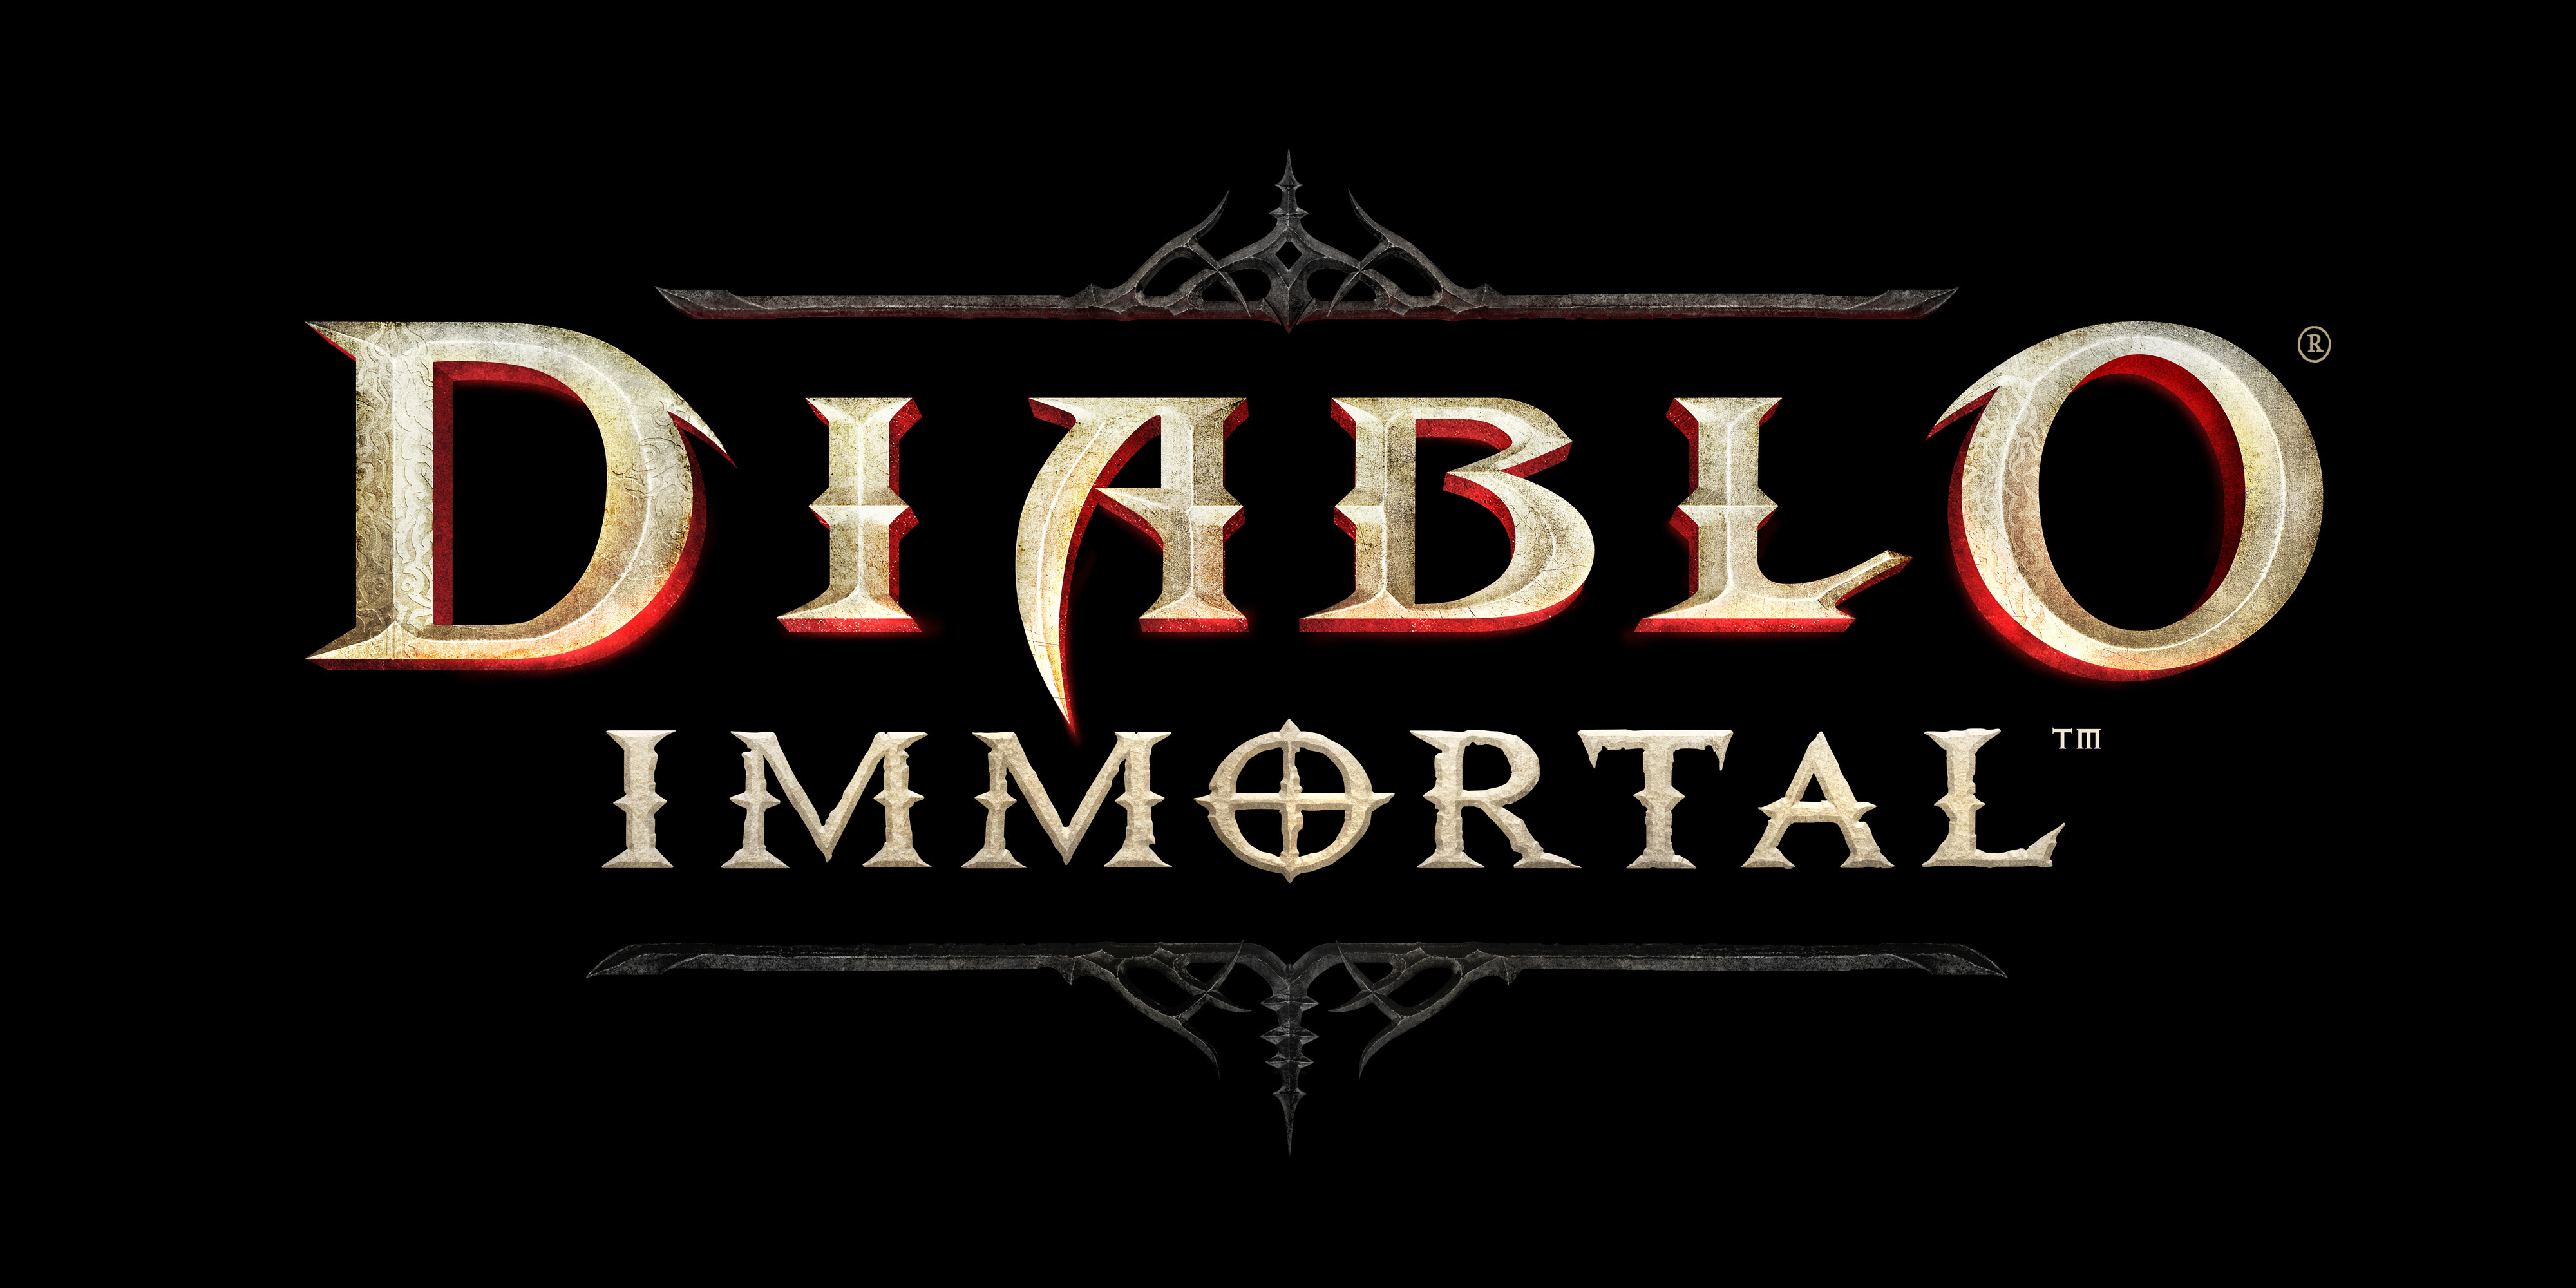 blizzard announces diablo immortal